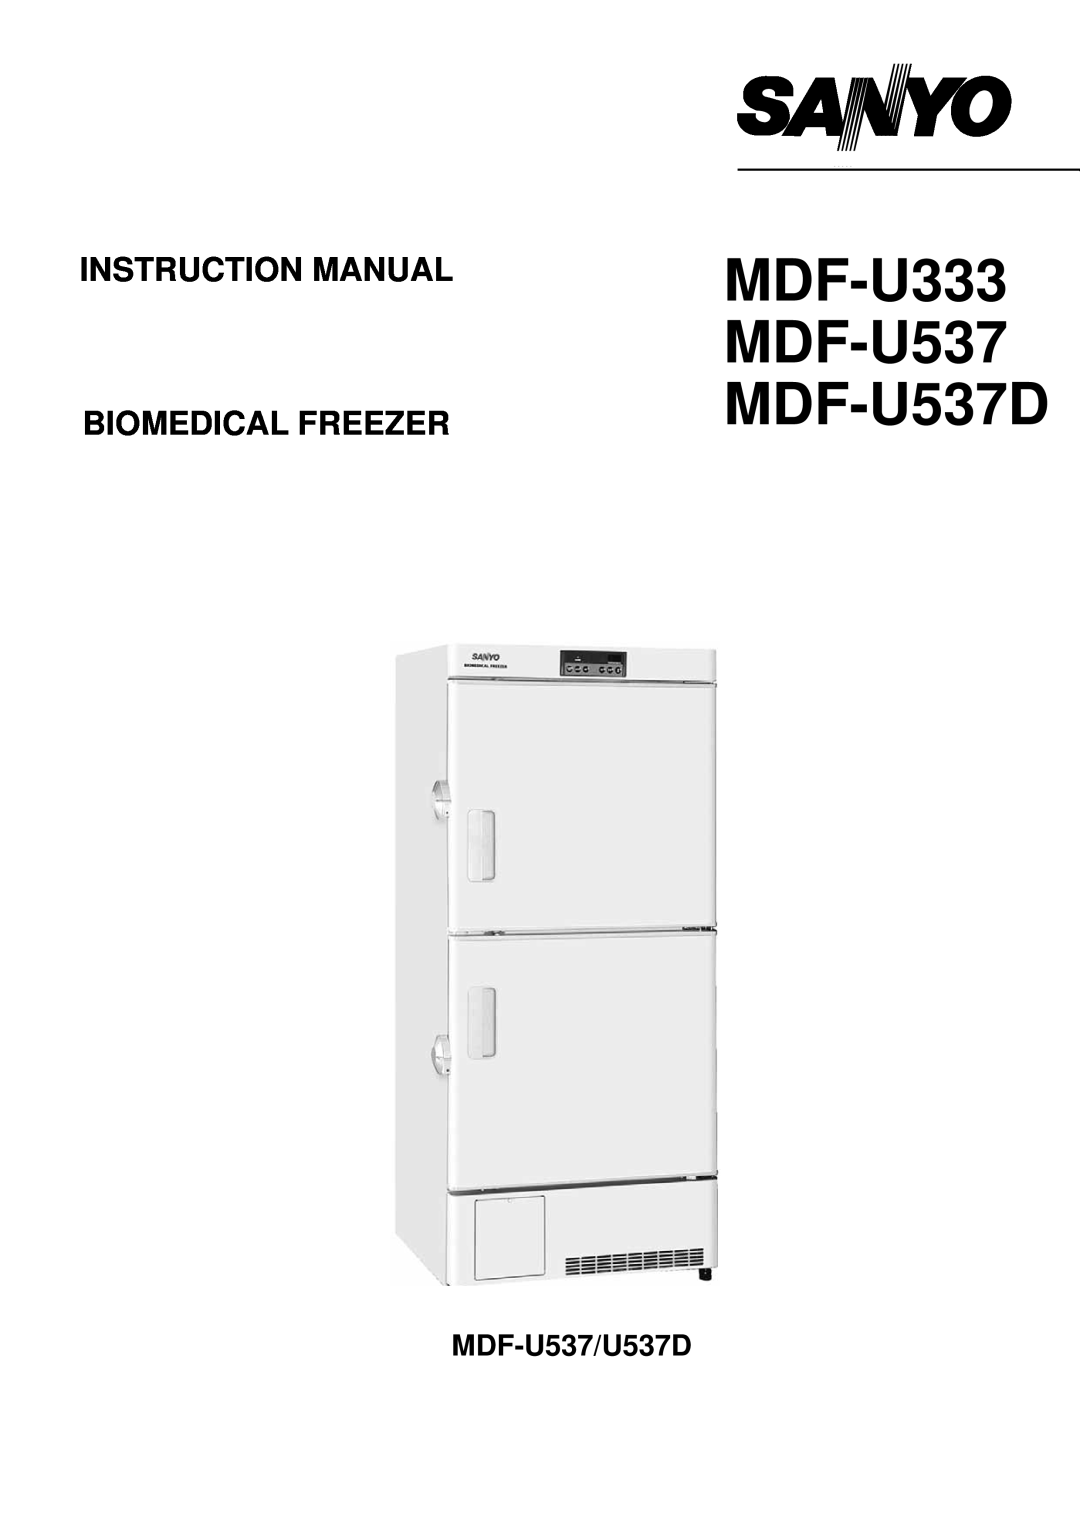 Sanyo instruction manual MDF-U333 MDF-U537 MDF-U537D, MDF-U537/U537D 